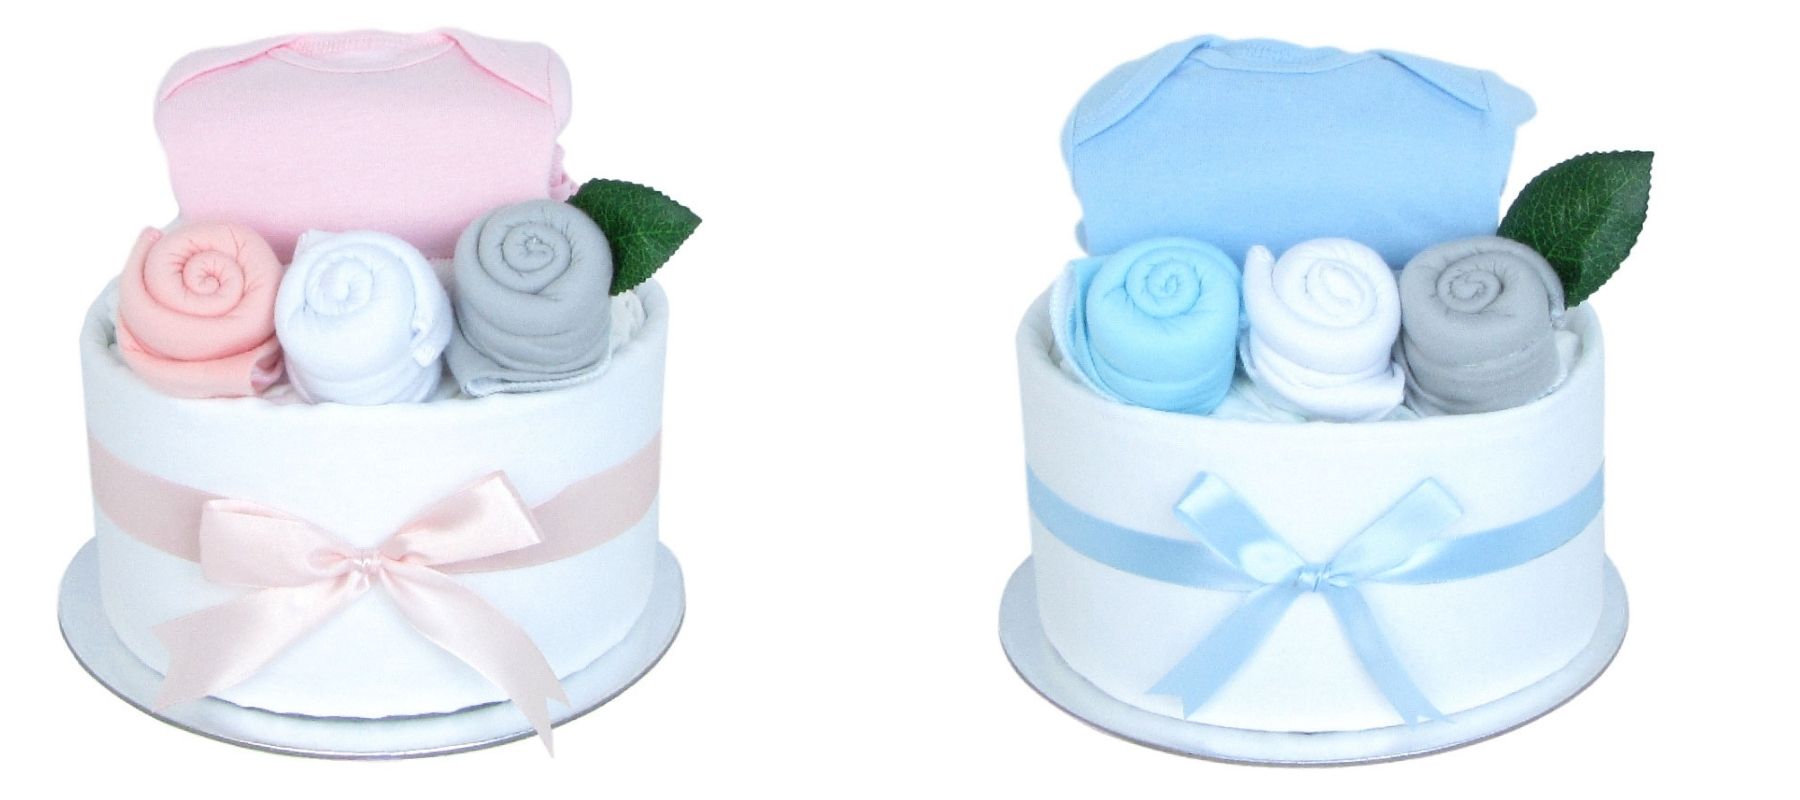 Baby's Party Gift Set | Newborn Baby Gifts | Eska Creative Gifting